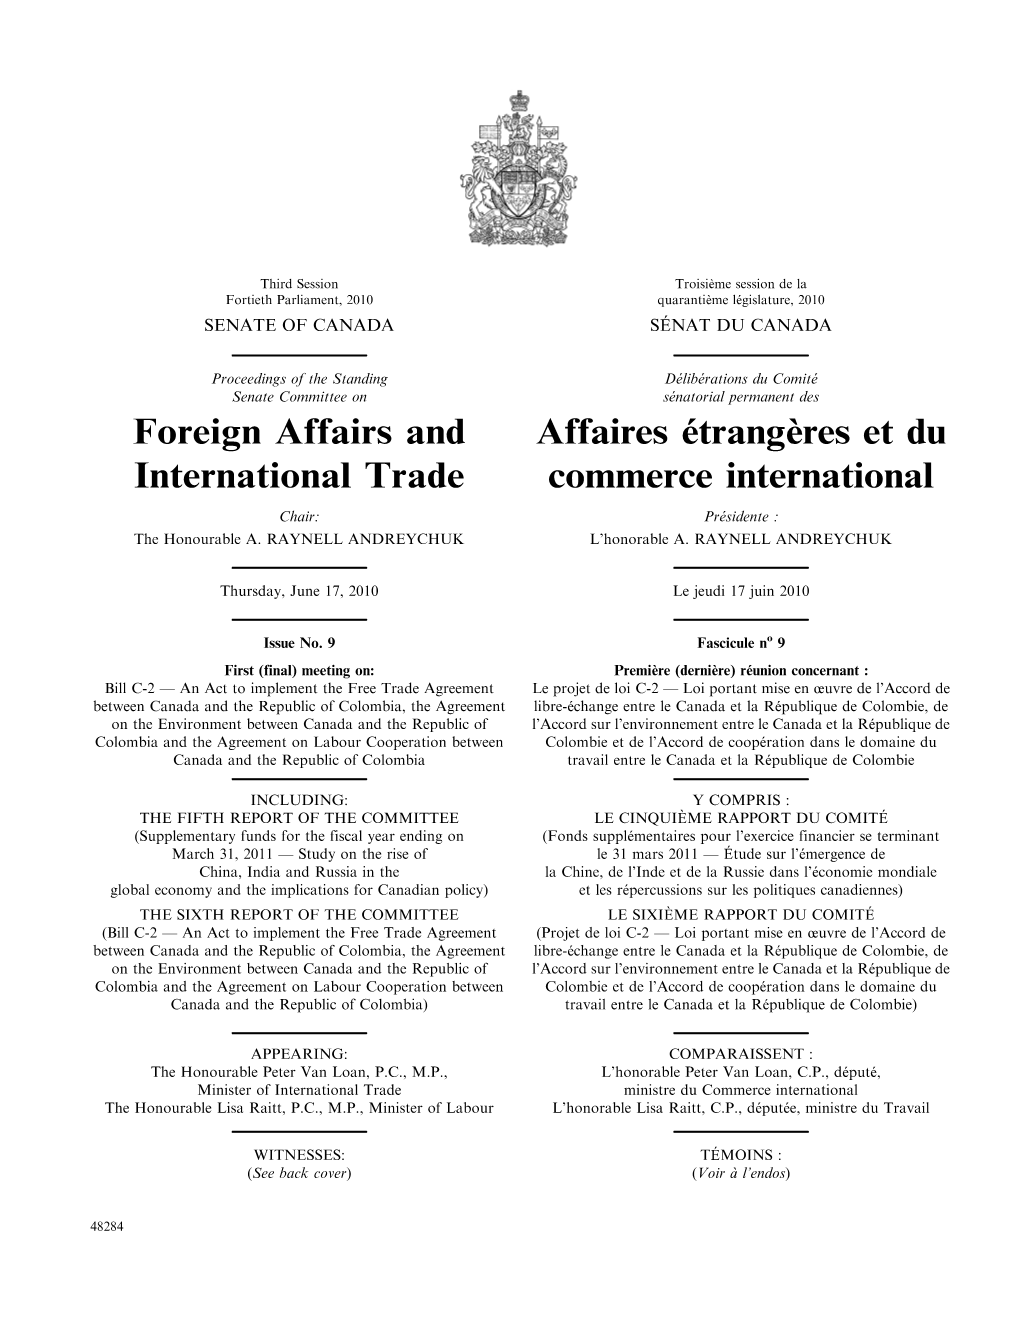 Foreign Affairs and International Trade Affaires Étrangères Et Du Commerce International